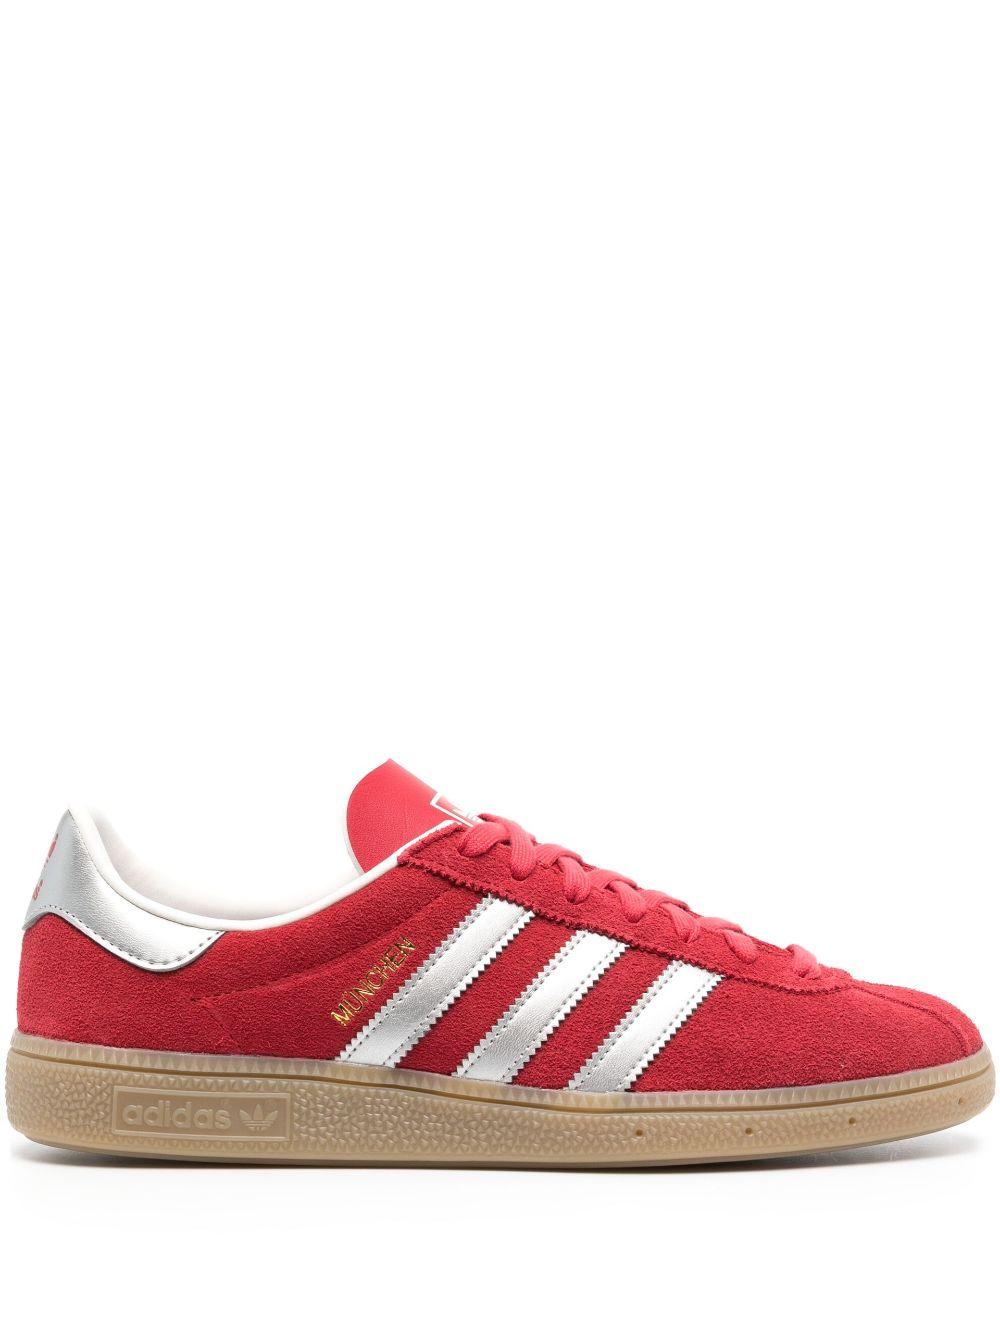 adidas Gazelle Munchen Low-top Sneakers in Red | Lyst